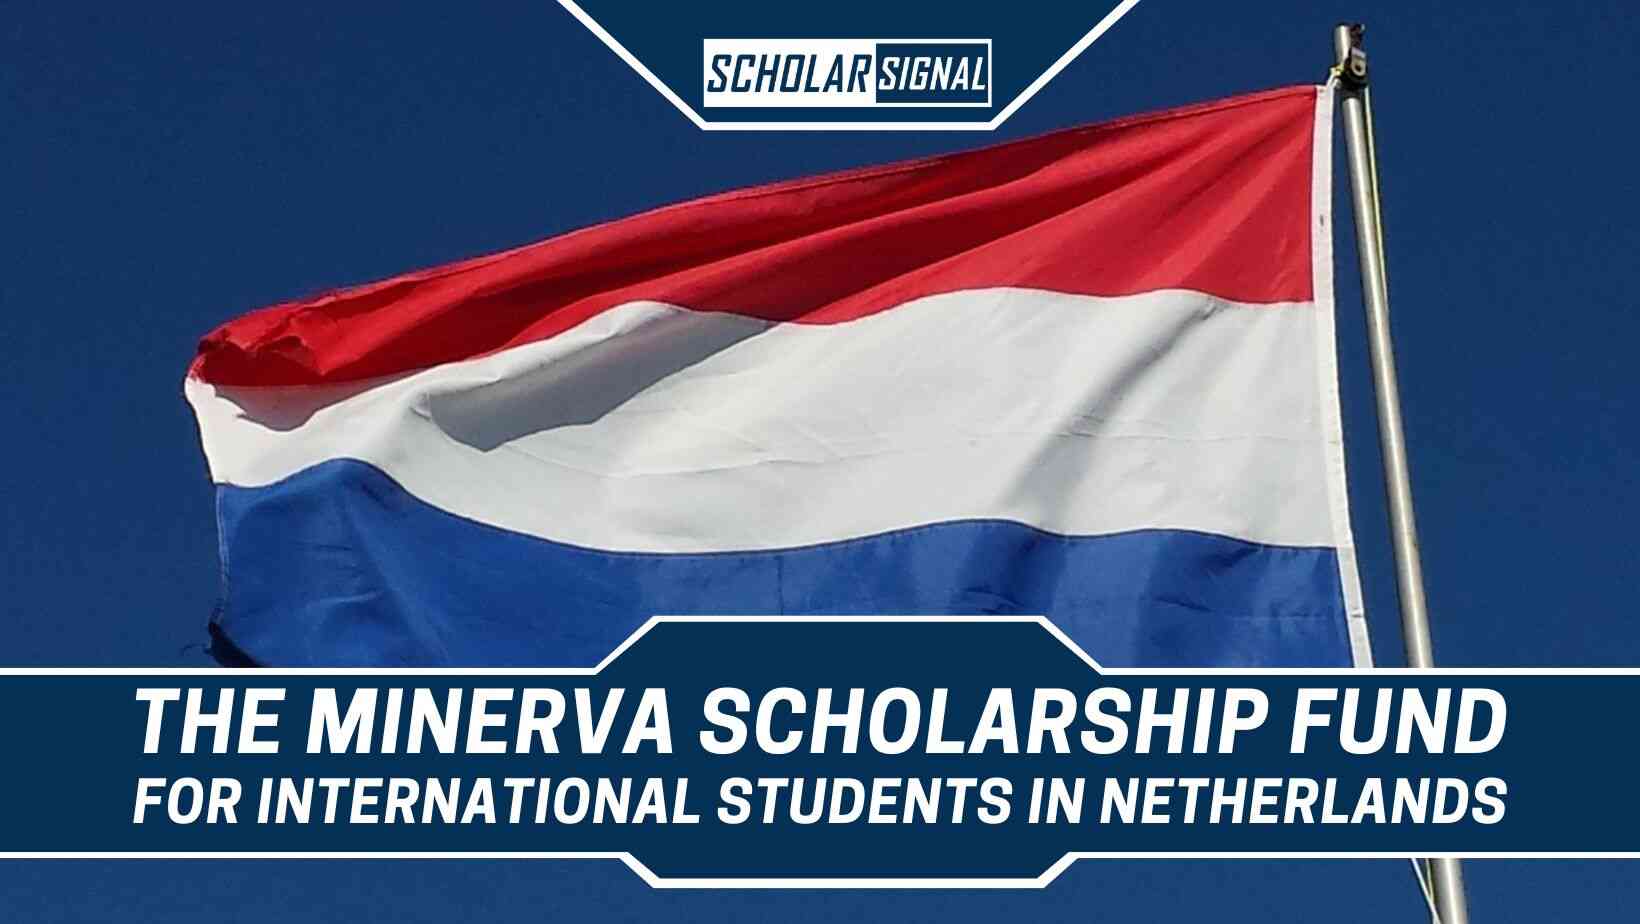 The Minerva Scholarship Fund at Leiden University Empowering